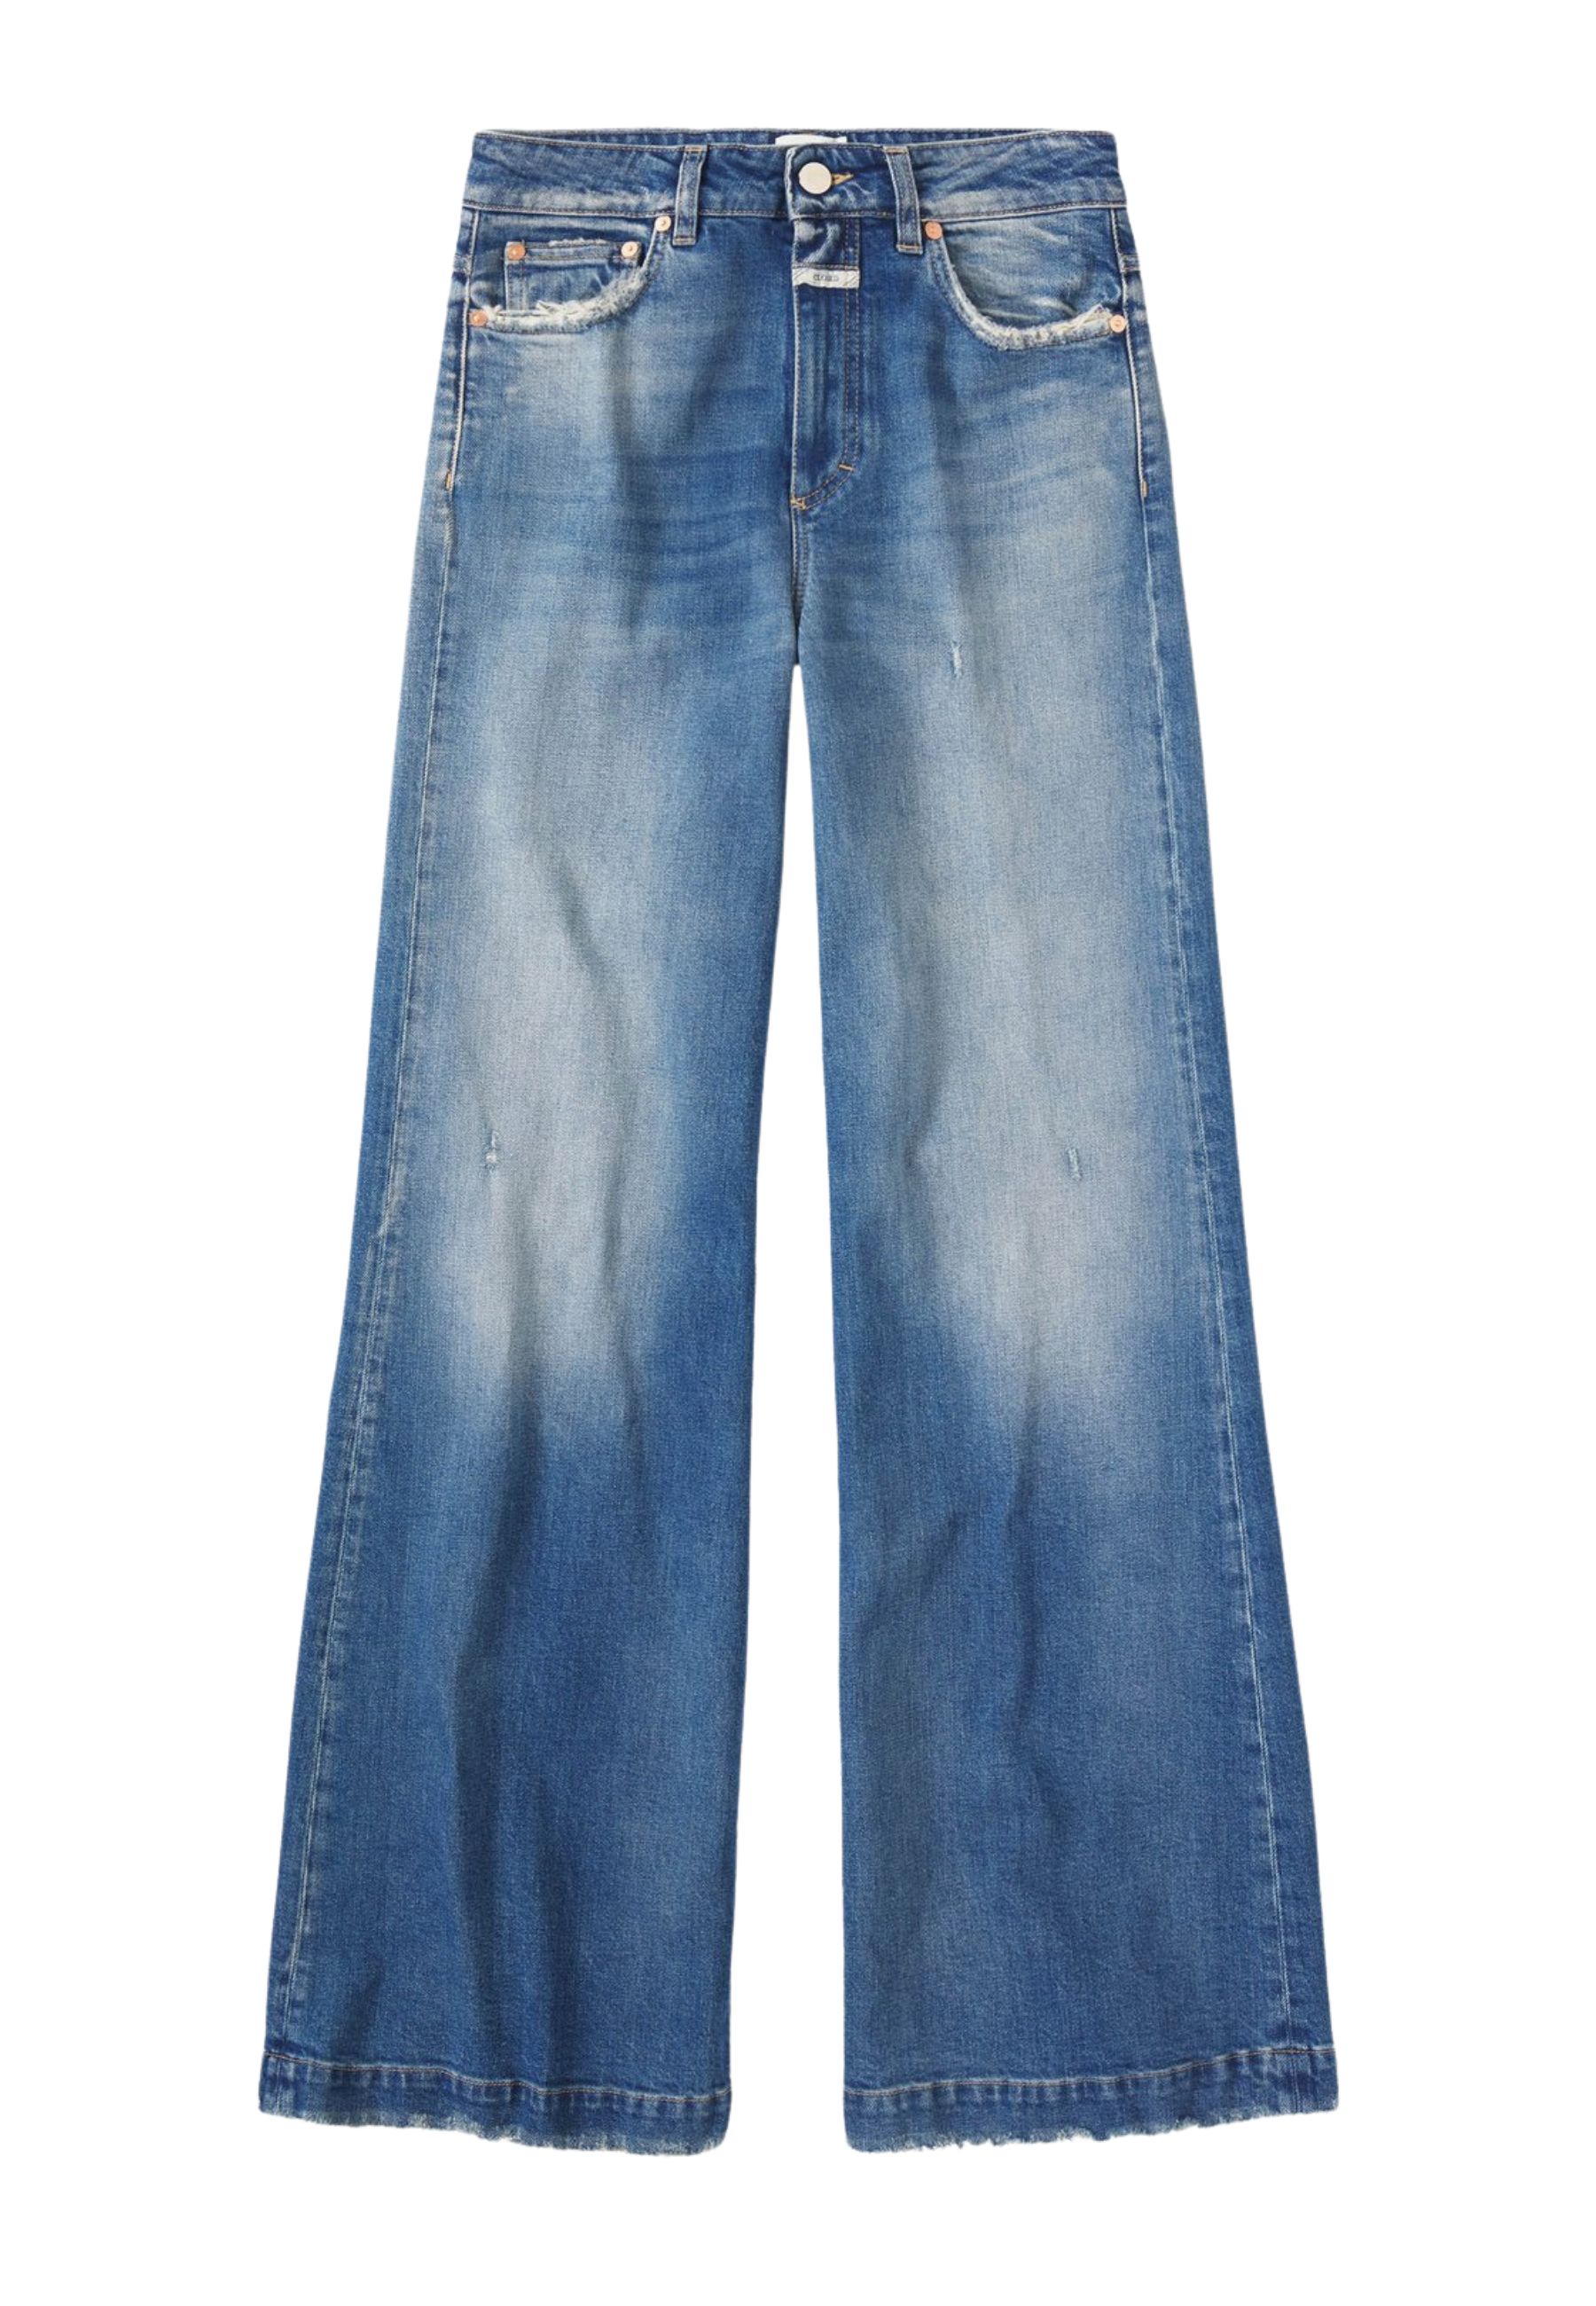 Jeans Middenblauw Glow-up jeans middenblauw